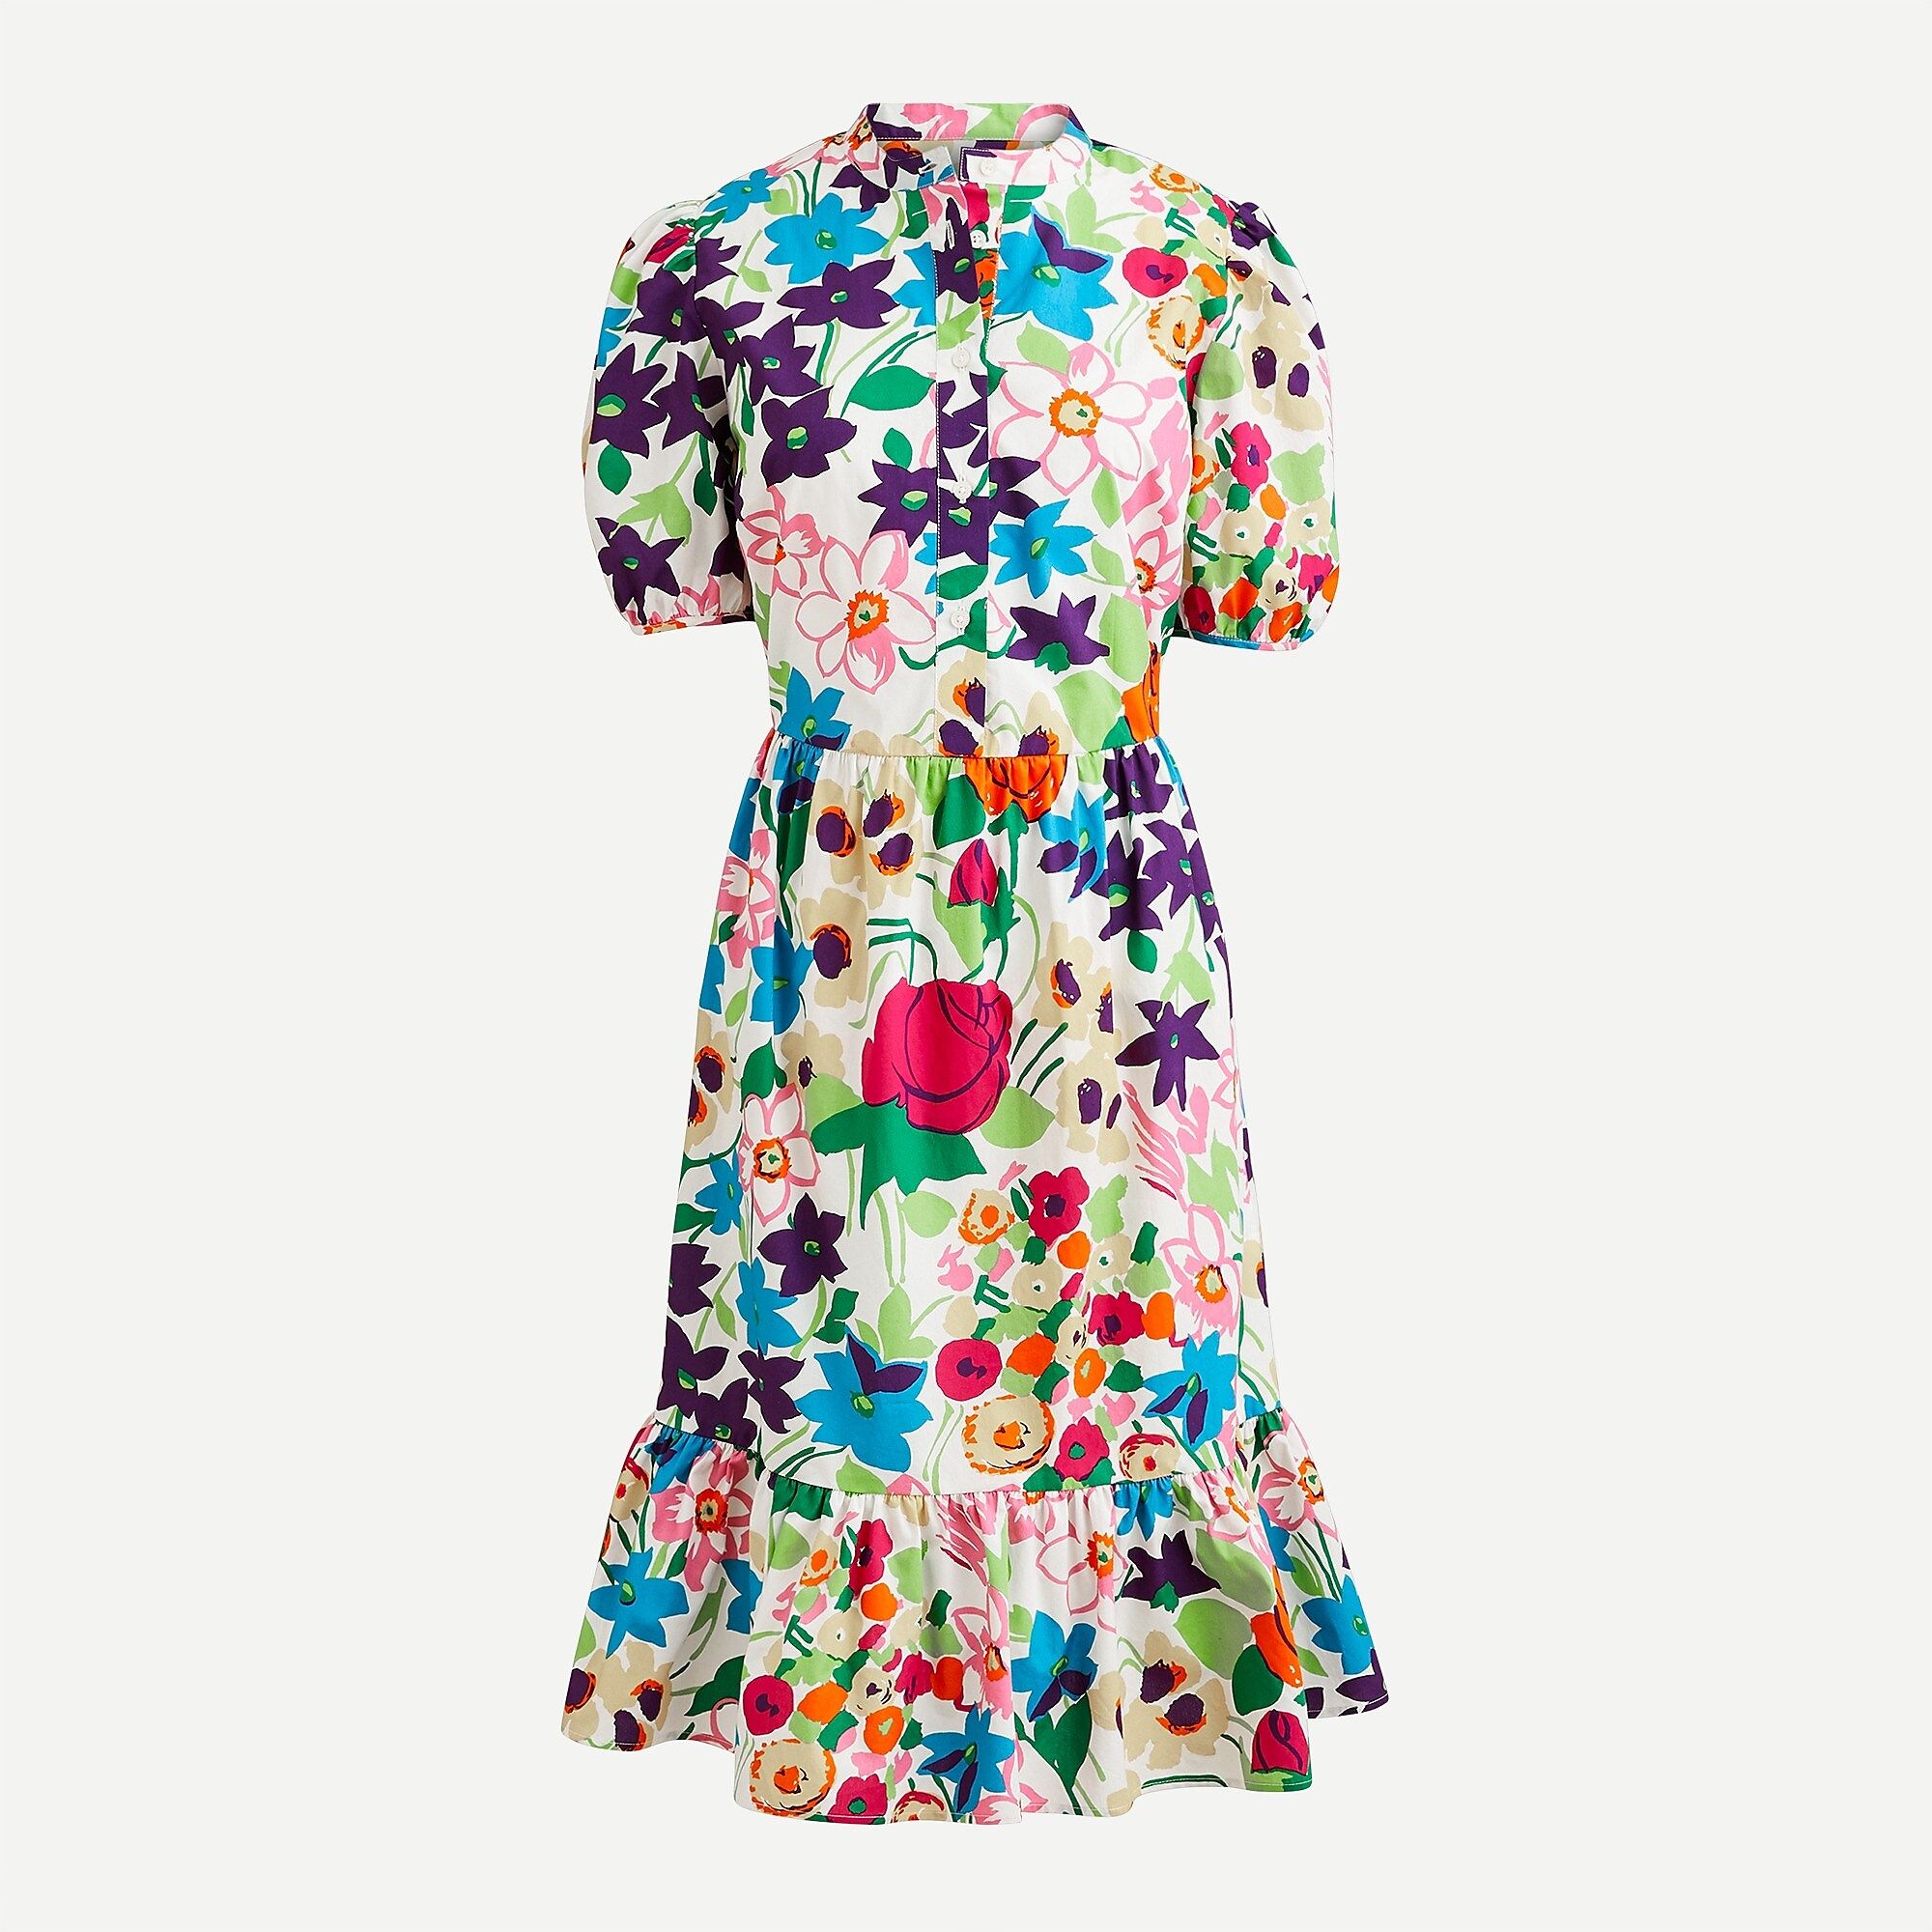 Puff-sleeve dress in vibrant garden print | J.Crew US